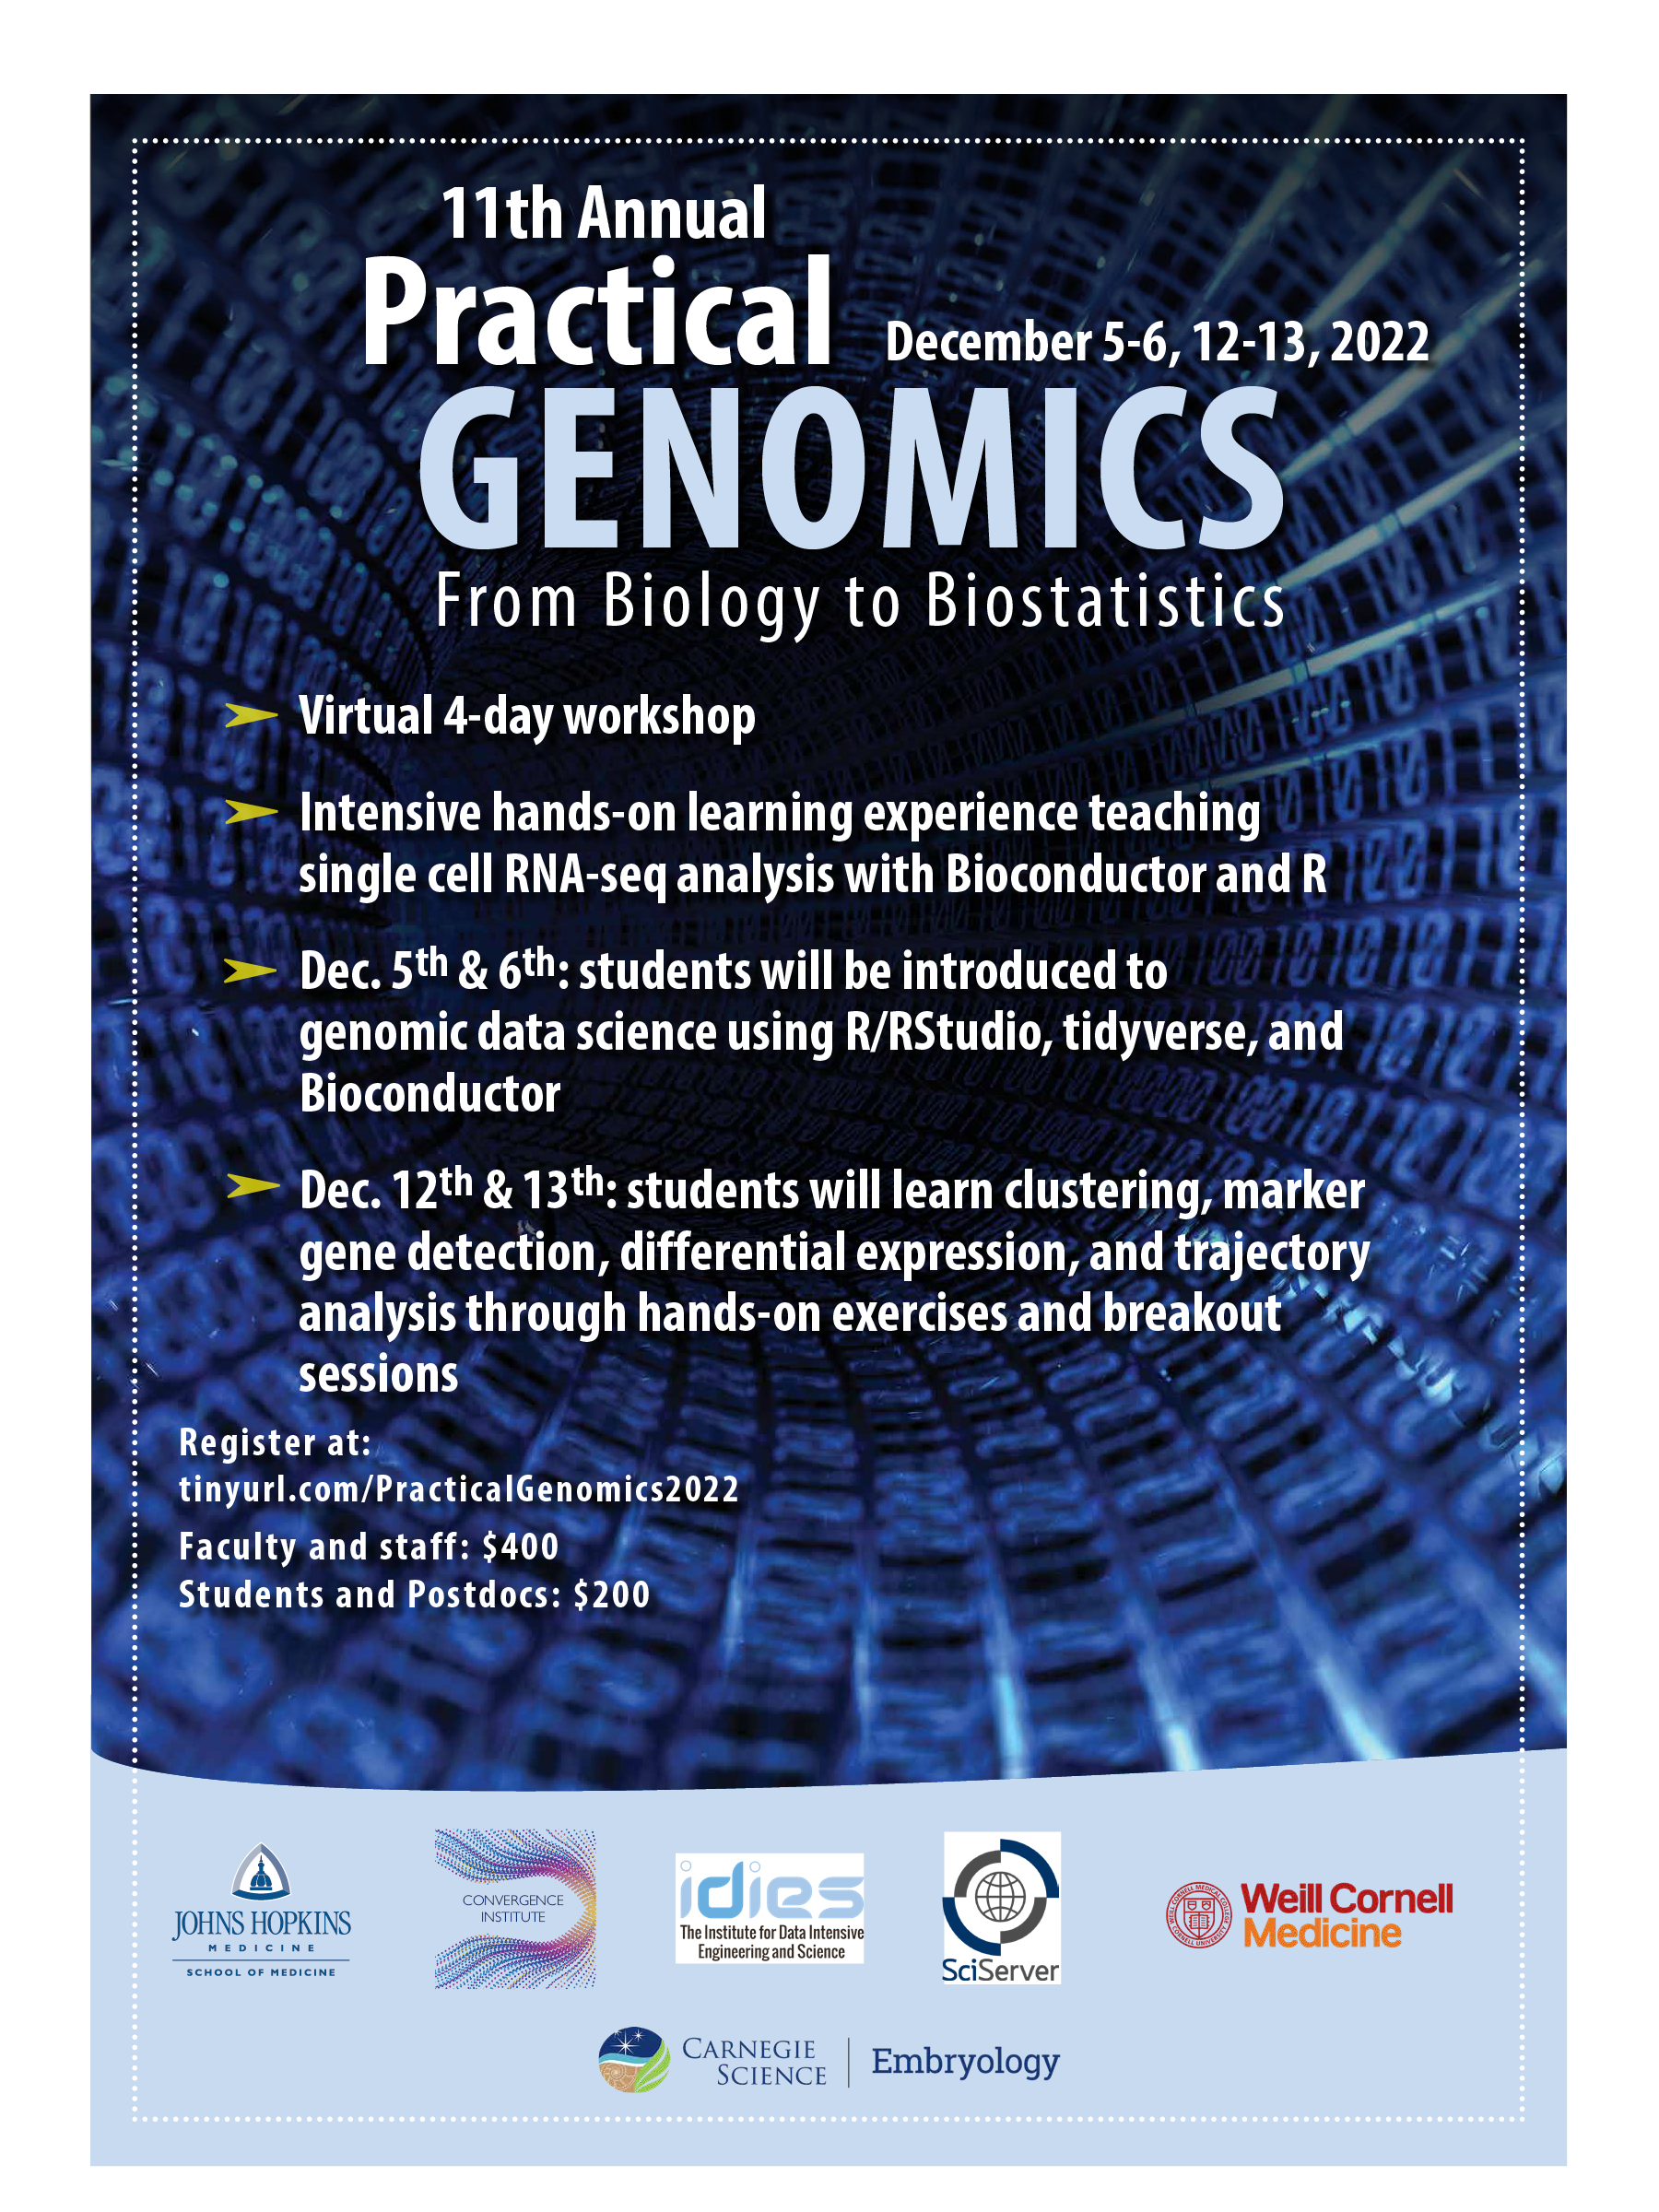 11th Annual Practical Genomics